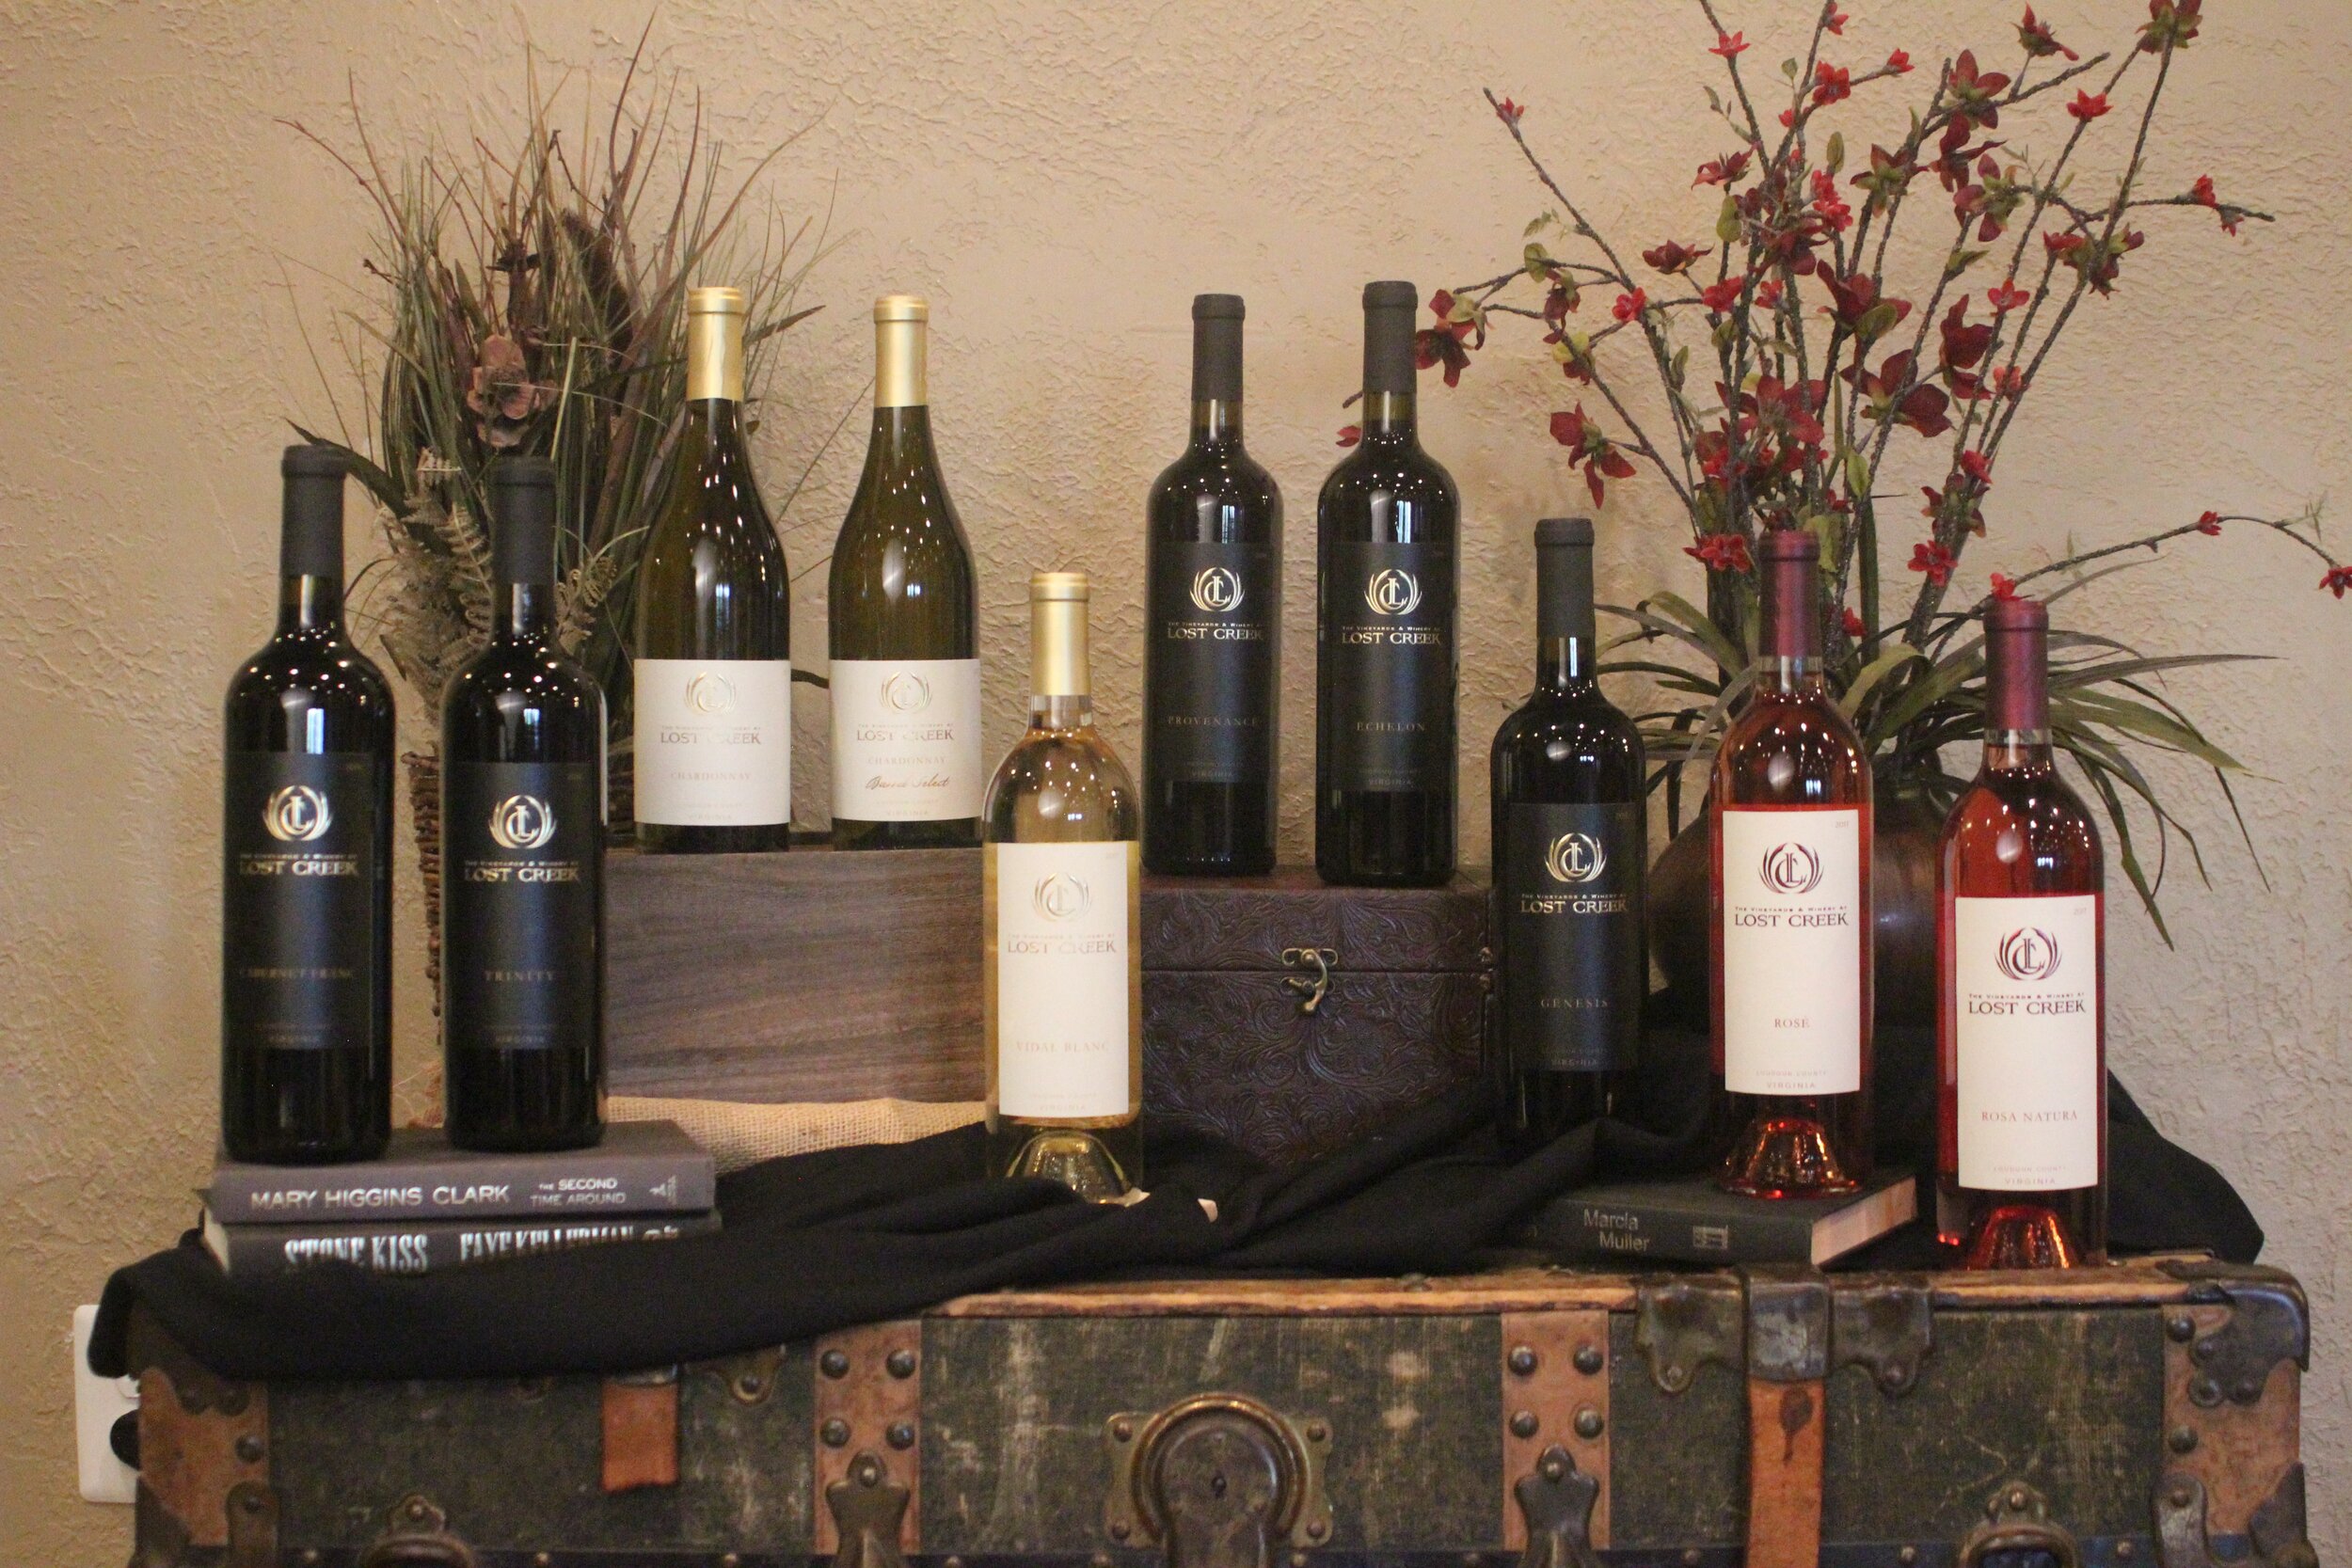 Award-winning Loudoun County Wines